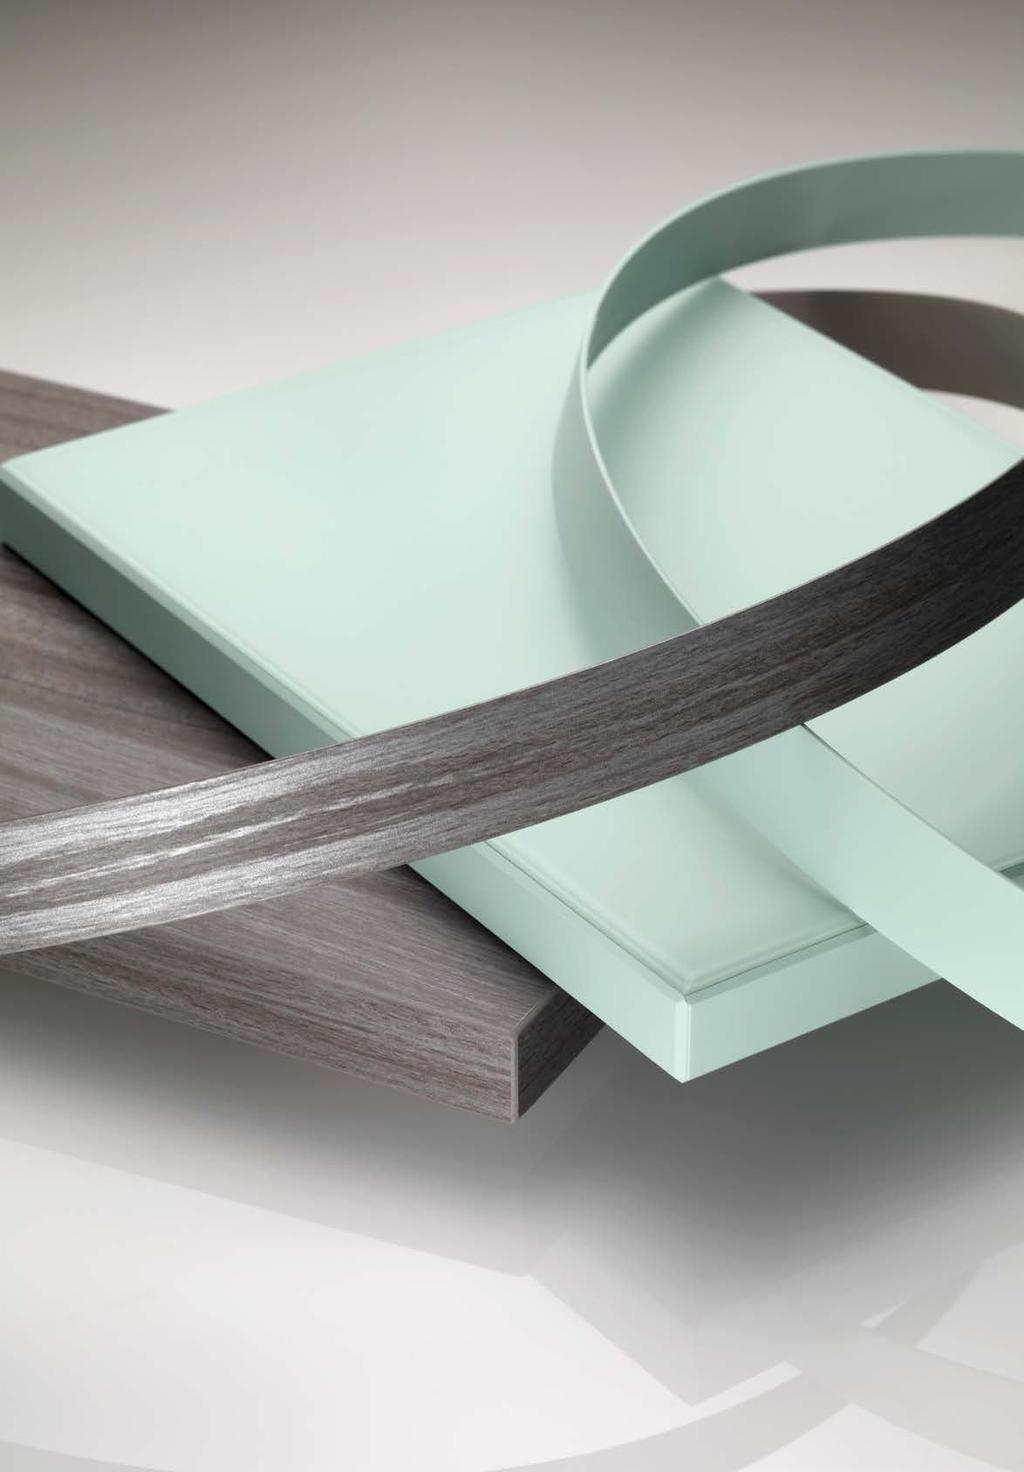 RAUKANTEX FLAT MATT Premium Selection: Flat matt edgebands 100 % compatible with RAUVISIO crystal Flat matt represents a whole new generation of surfaces.